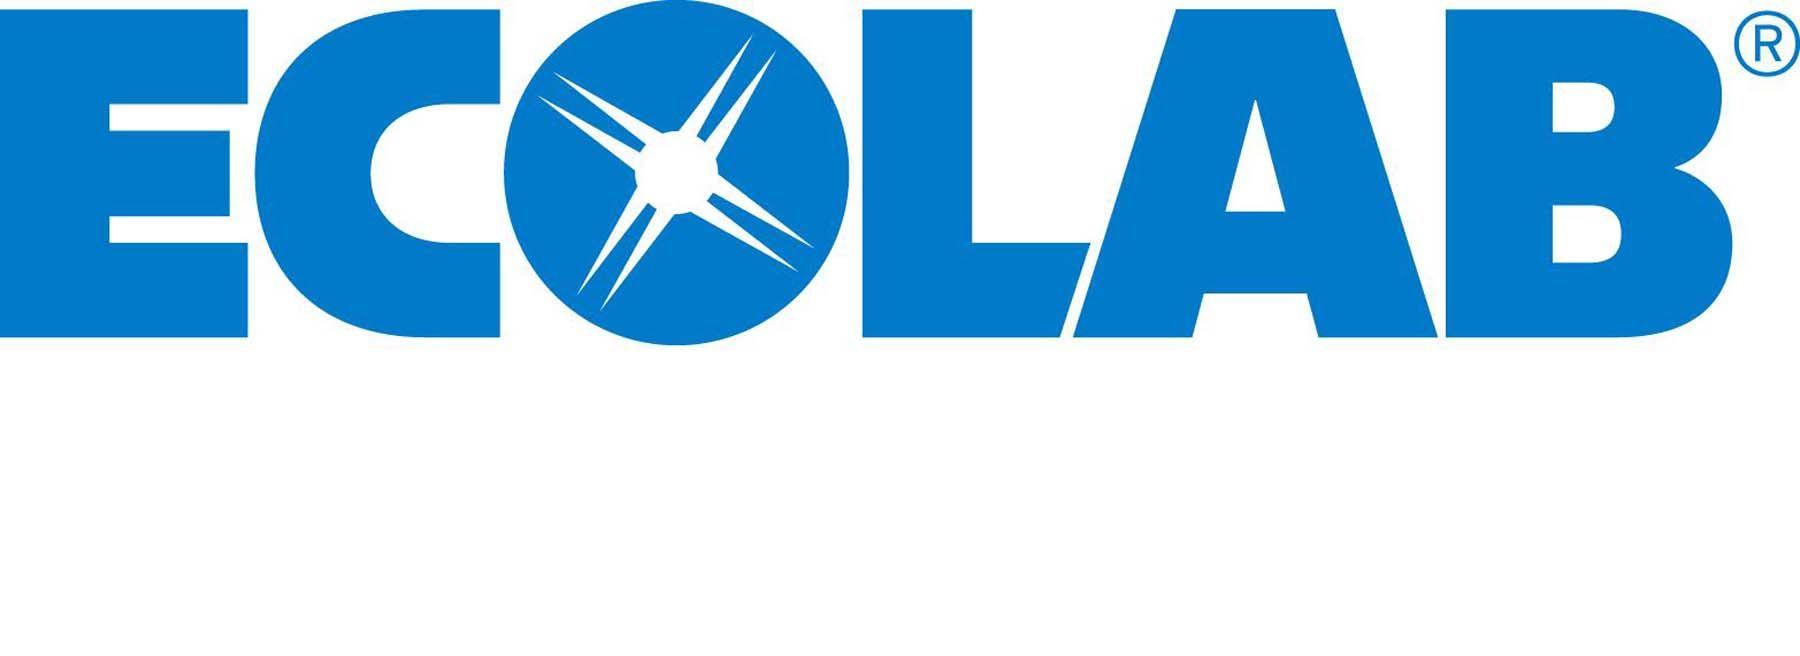 Ecolab Company Logo - Ecolab